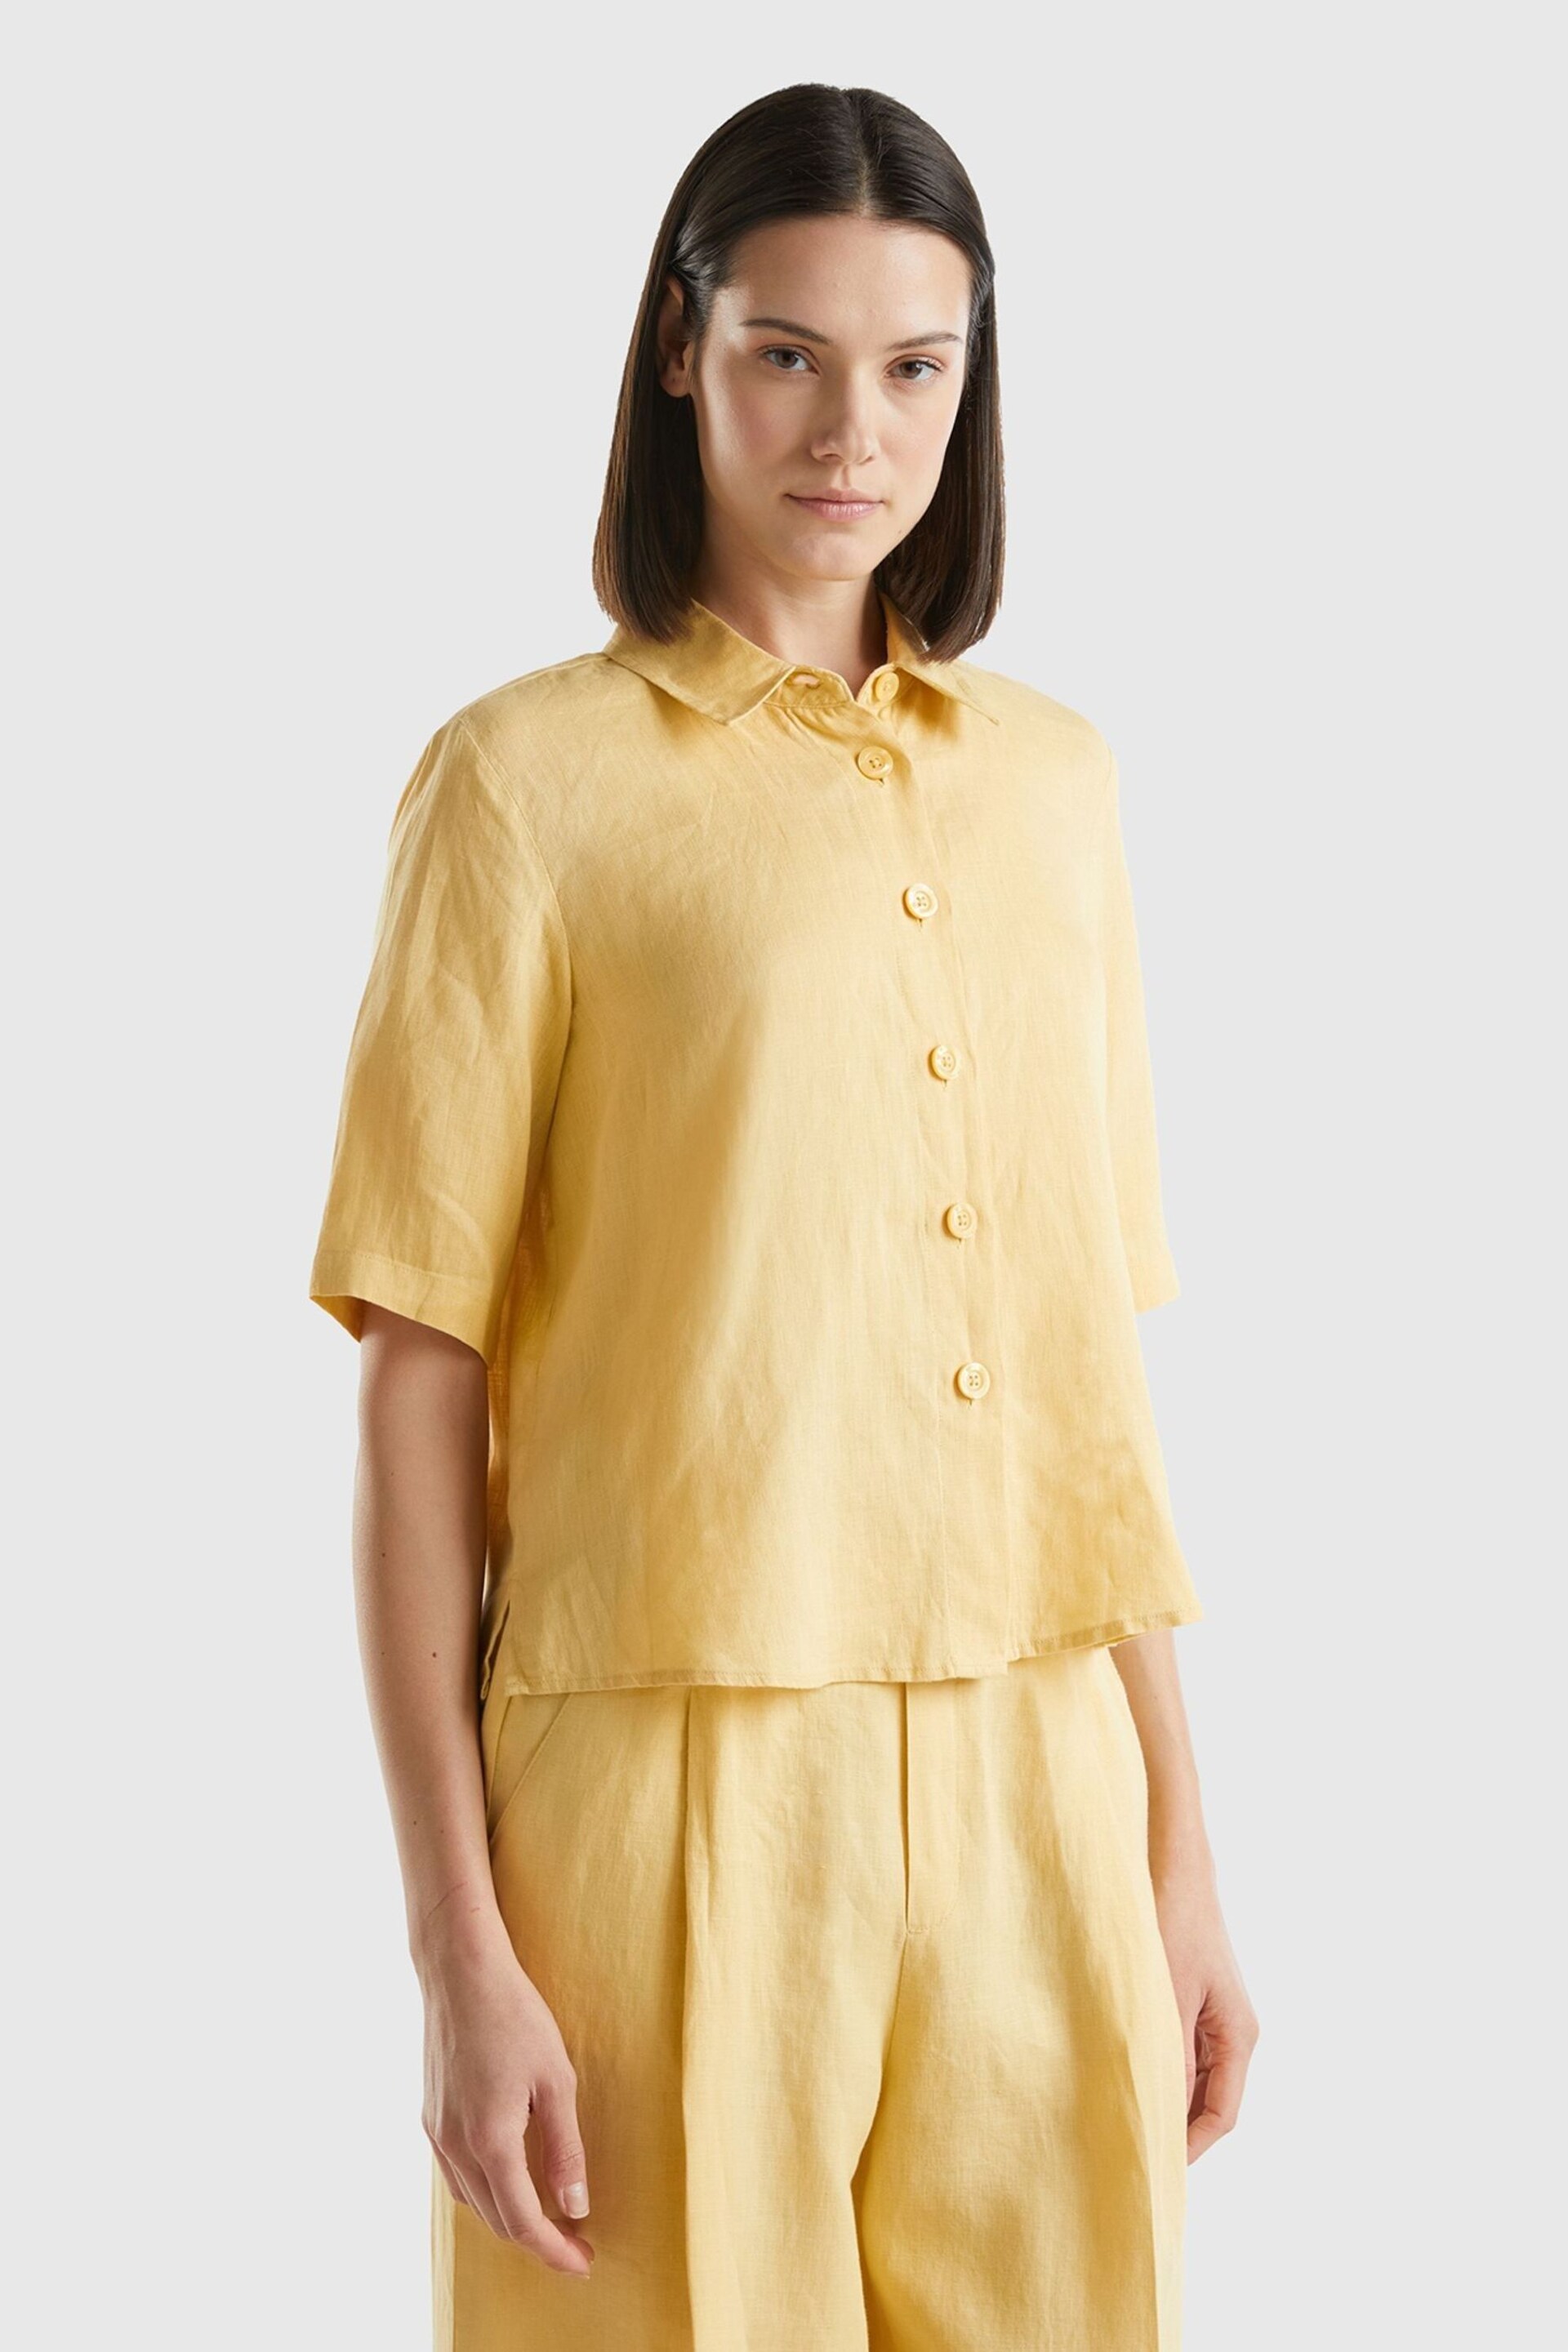 Benetton Linen Shirt - Image 3 of 4